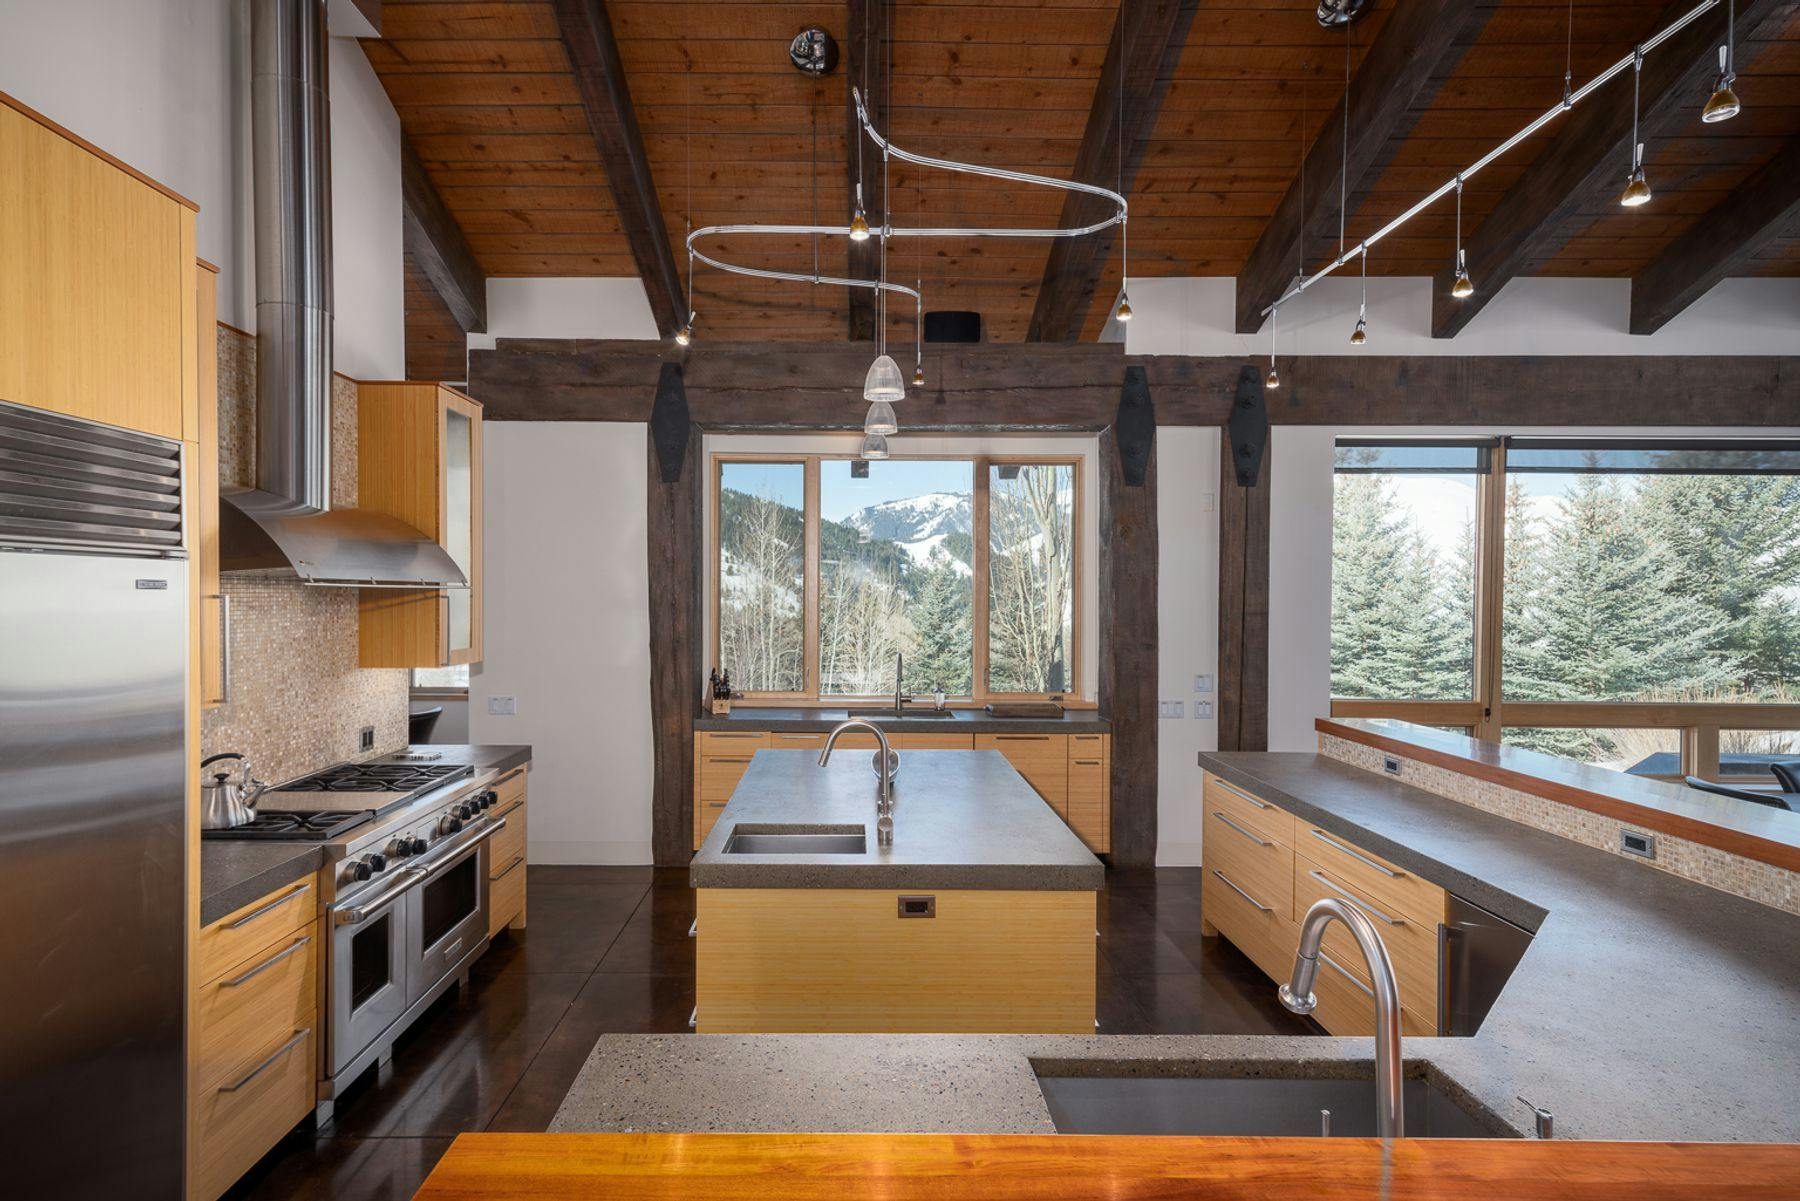 Vacation rental estate in Sun Valley with modern kitchen